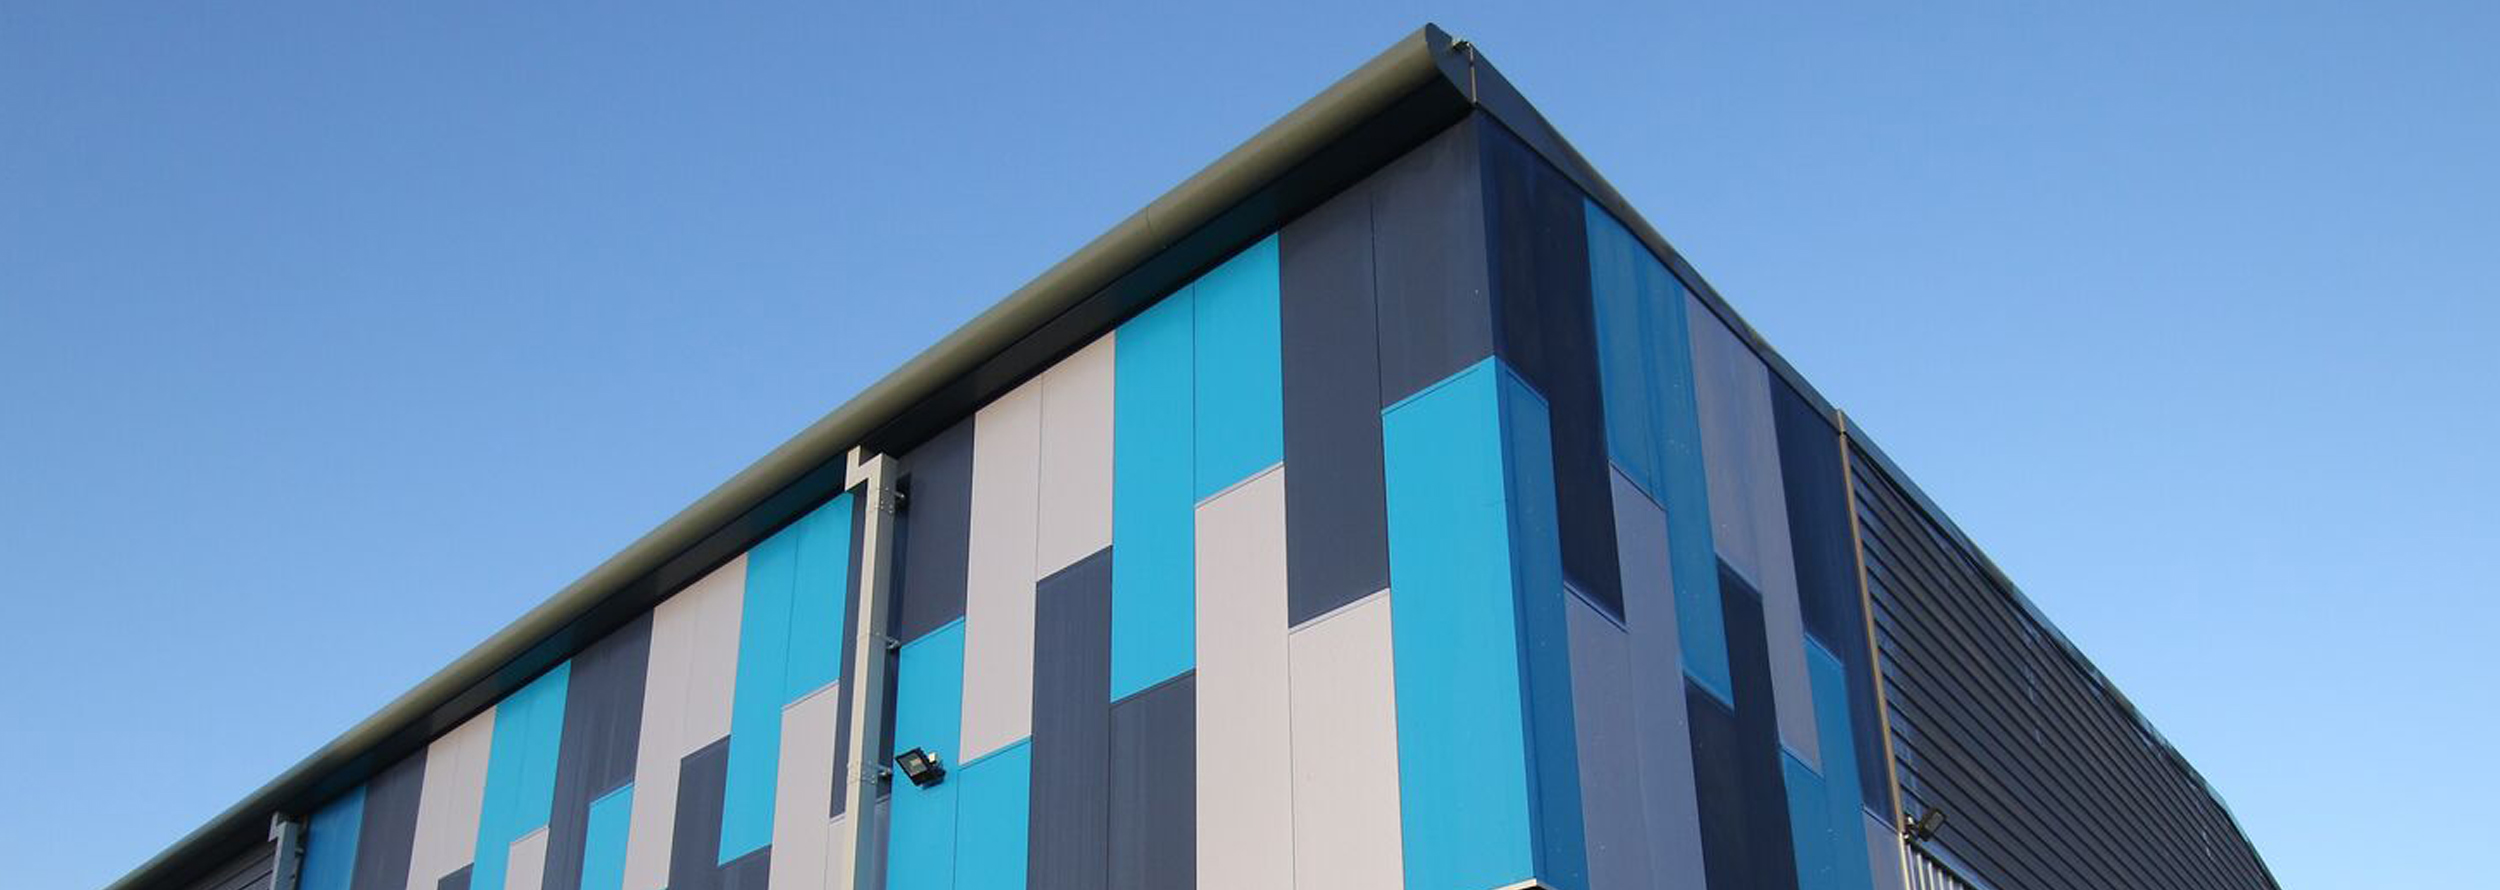 Tata Steel Insulated Wall Panels